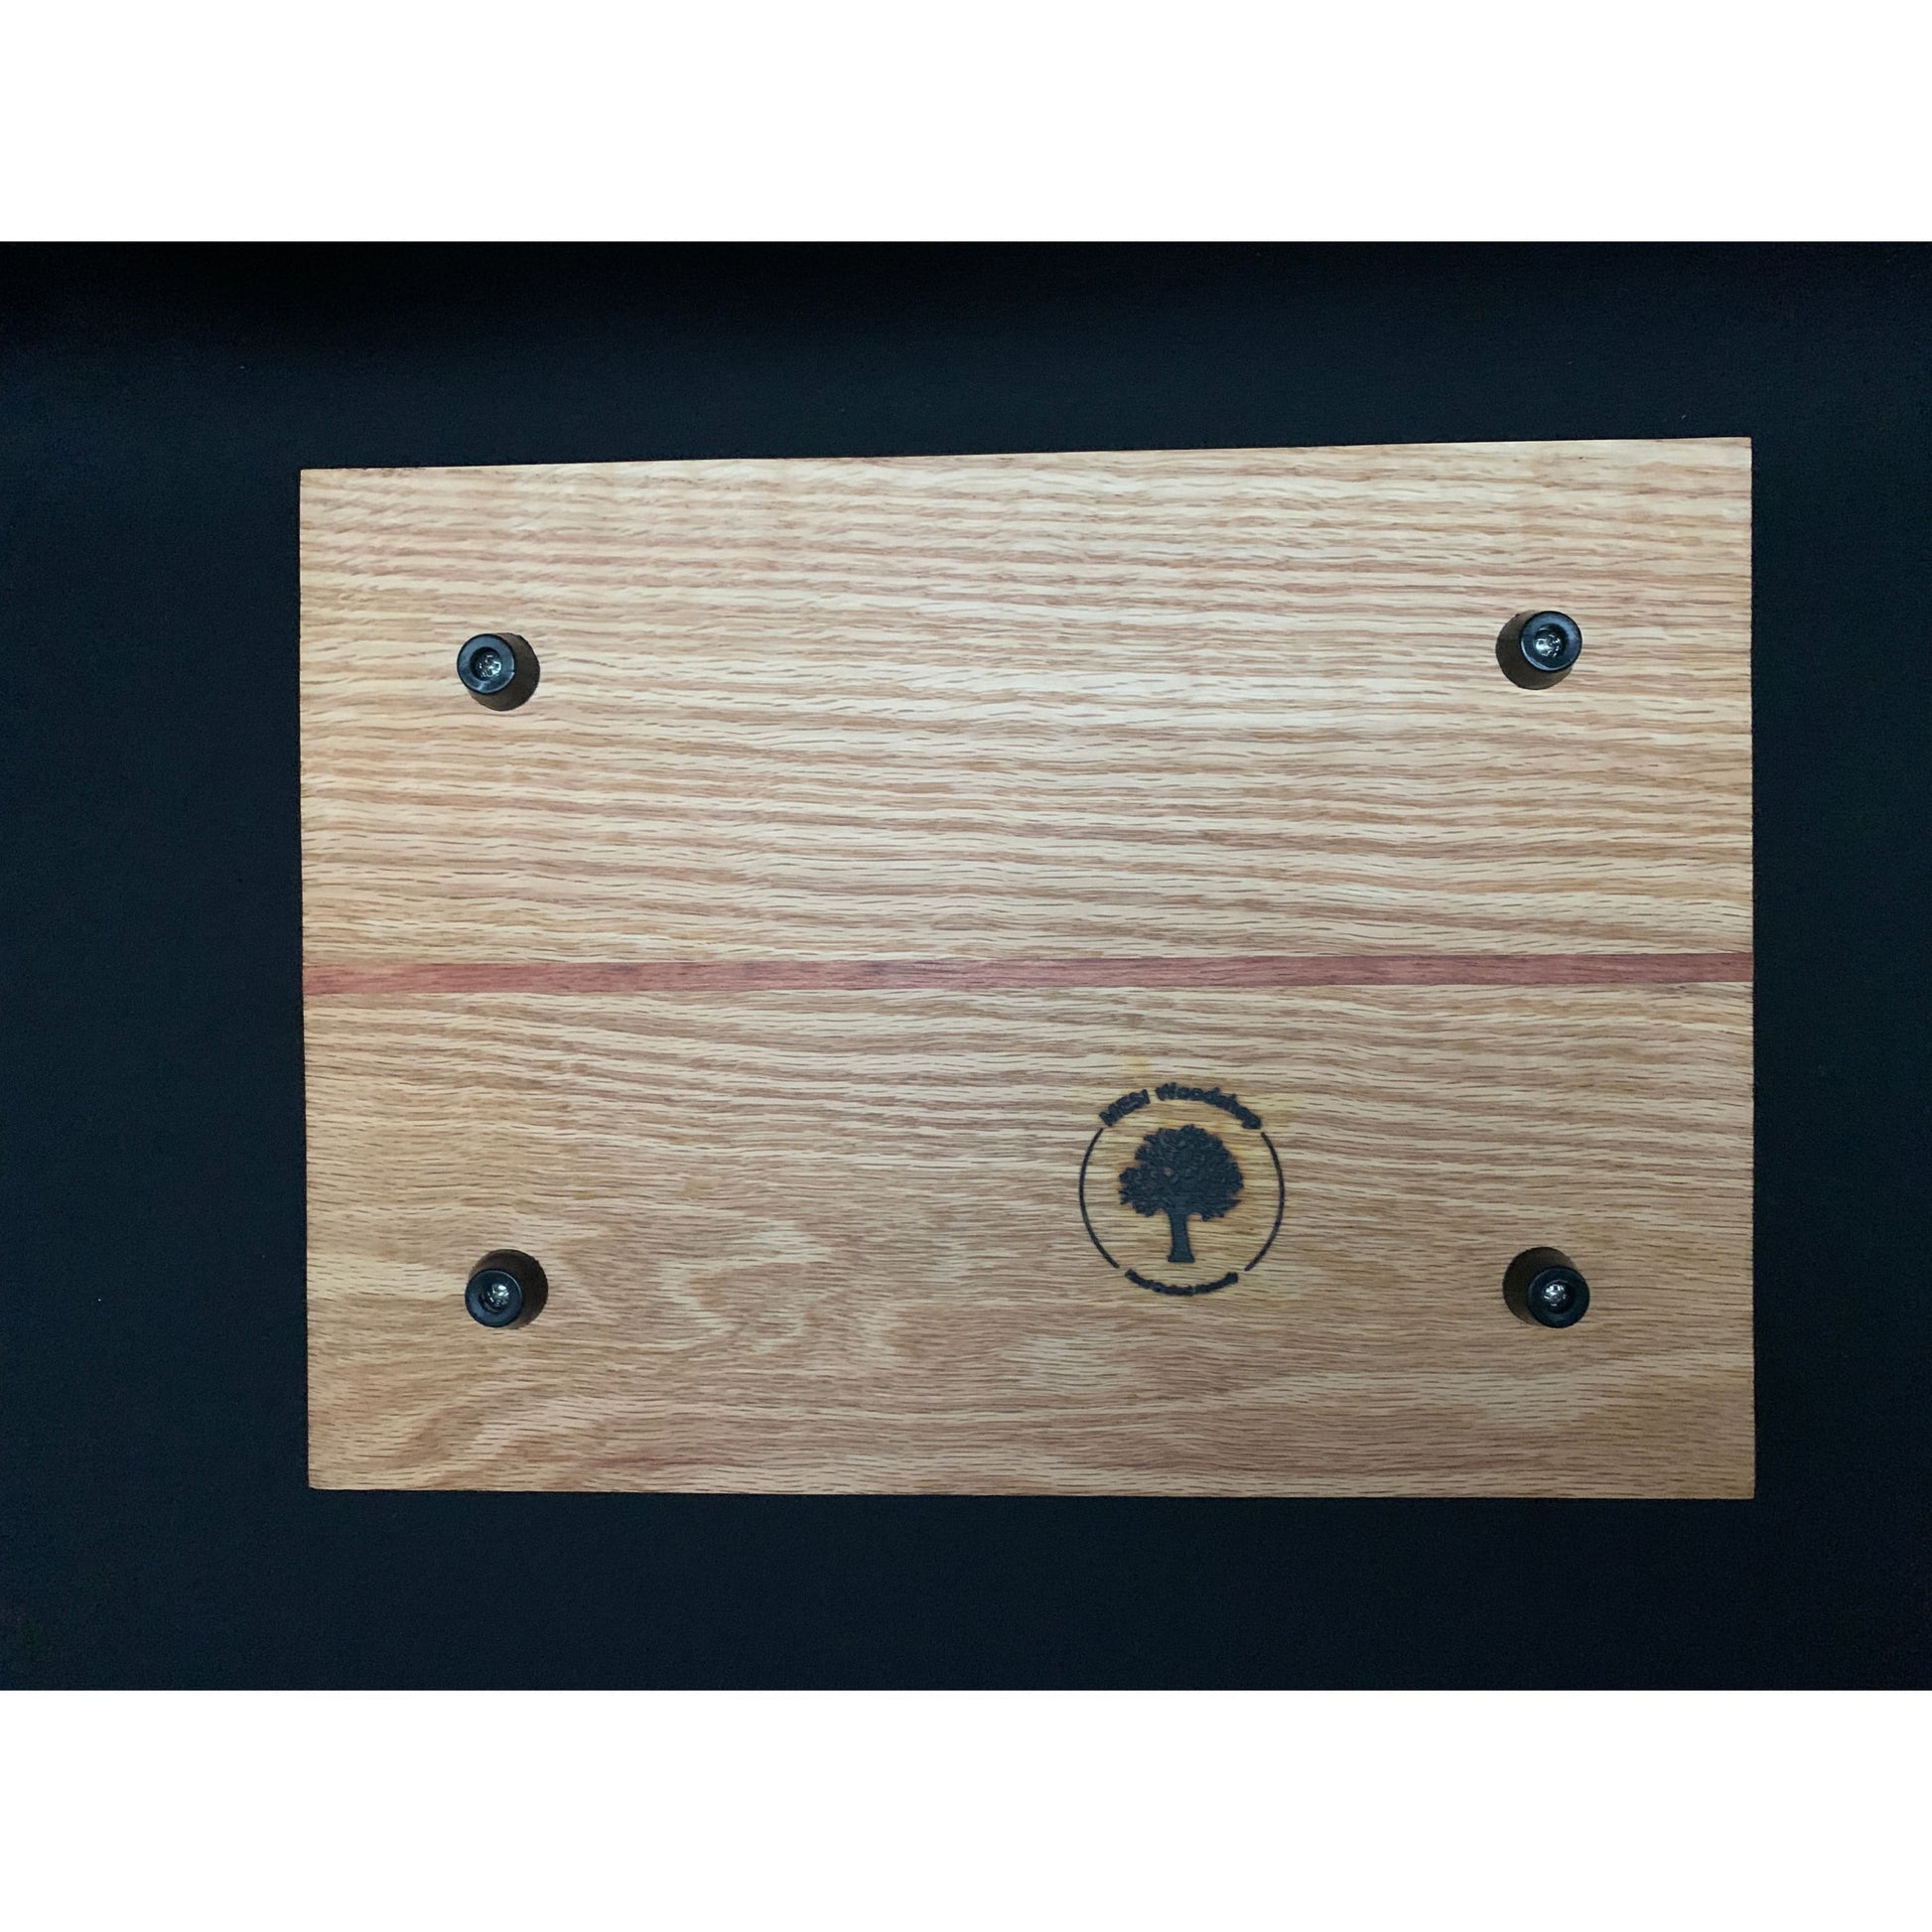 Serving Tray Cutting Board Non-slip Hardwood